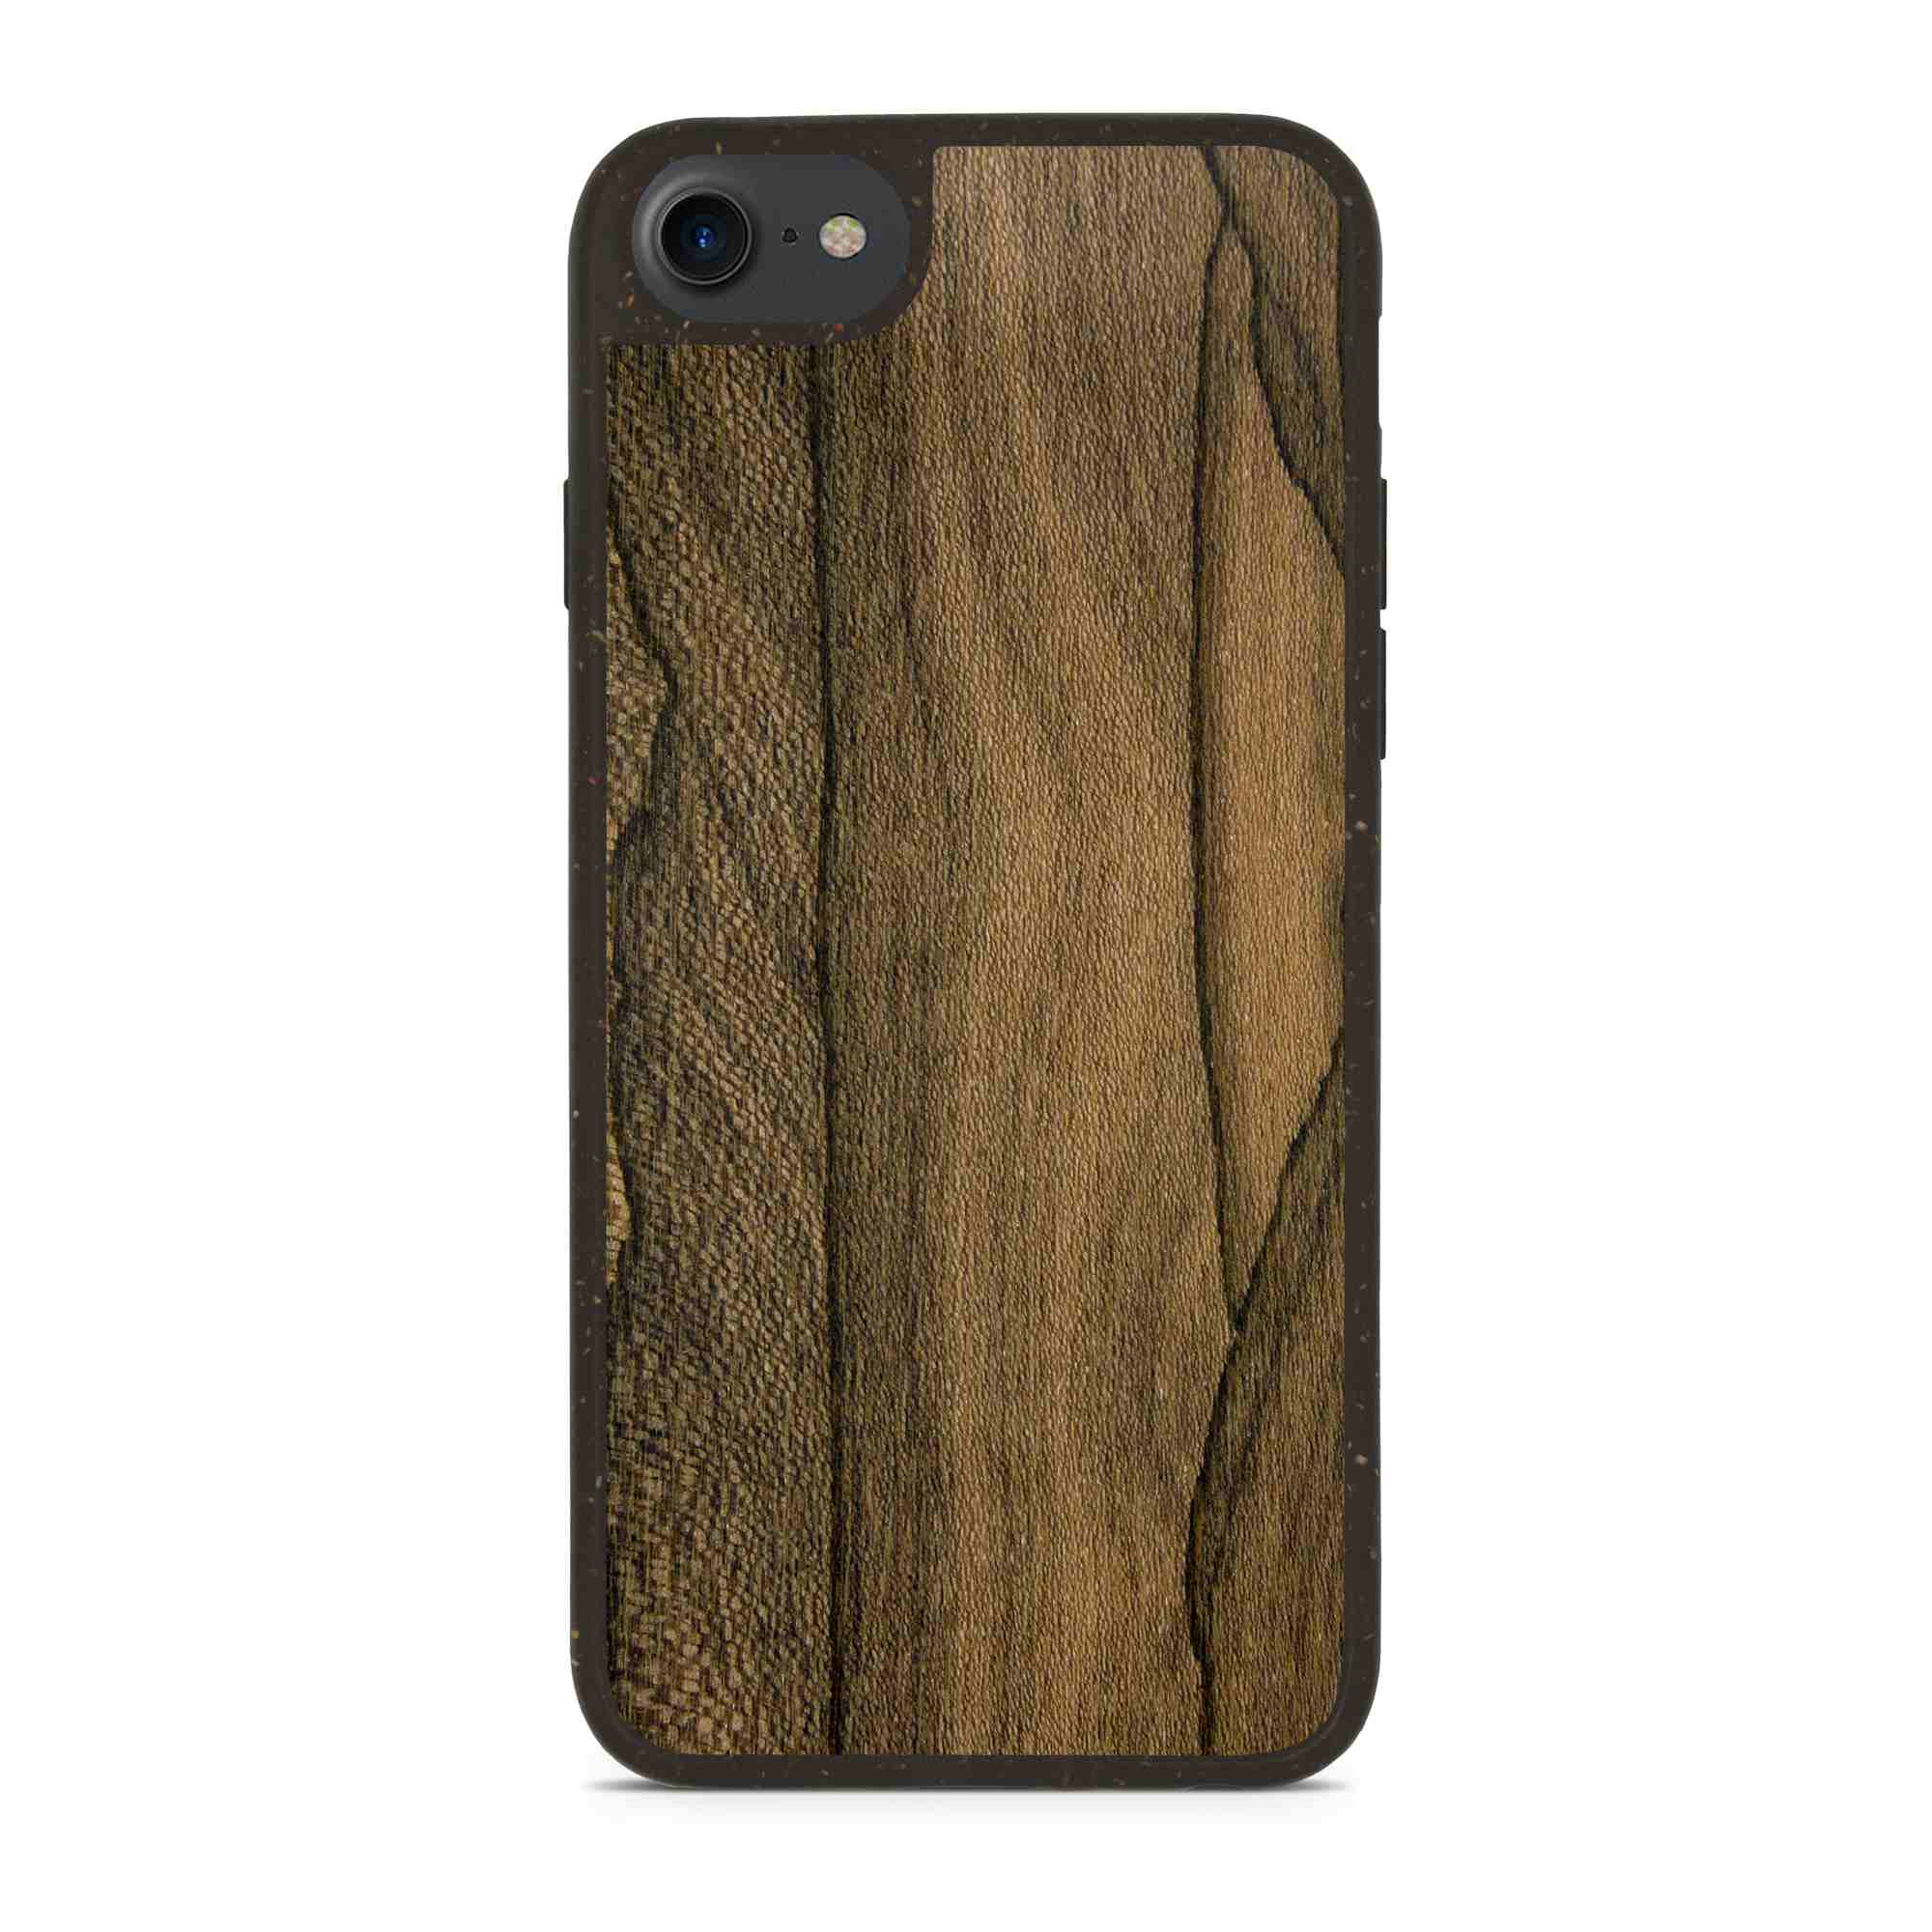 iPhone 7 Biologisch abbaubare Handyhülle aus Ziricote-Holz